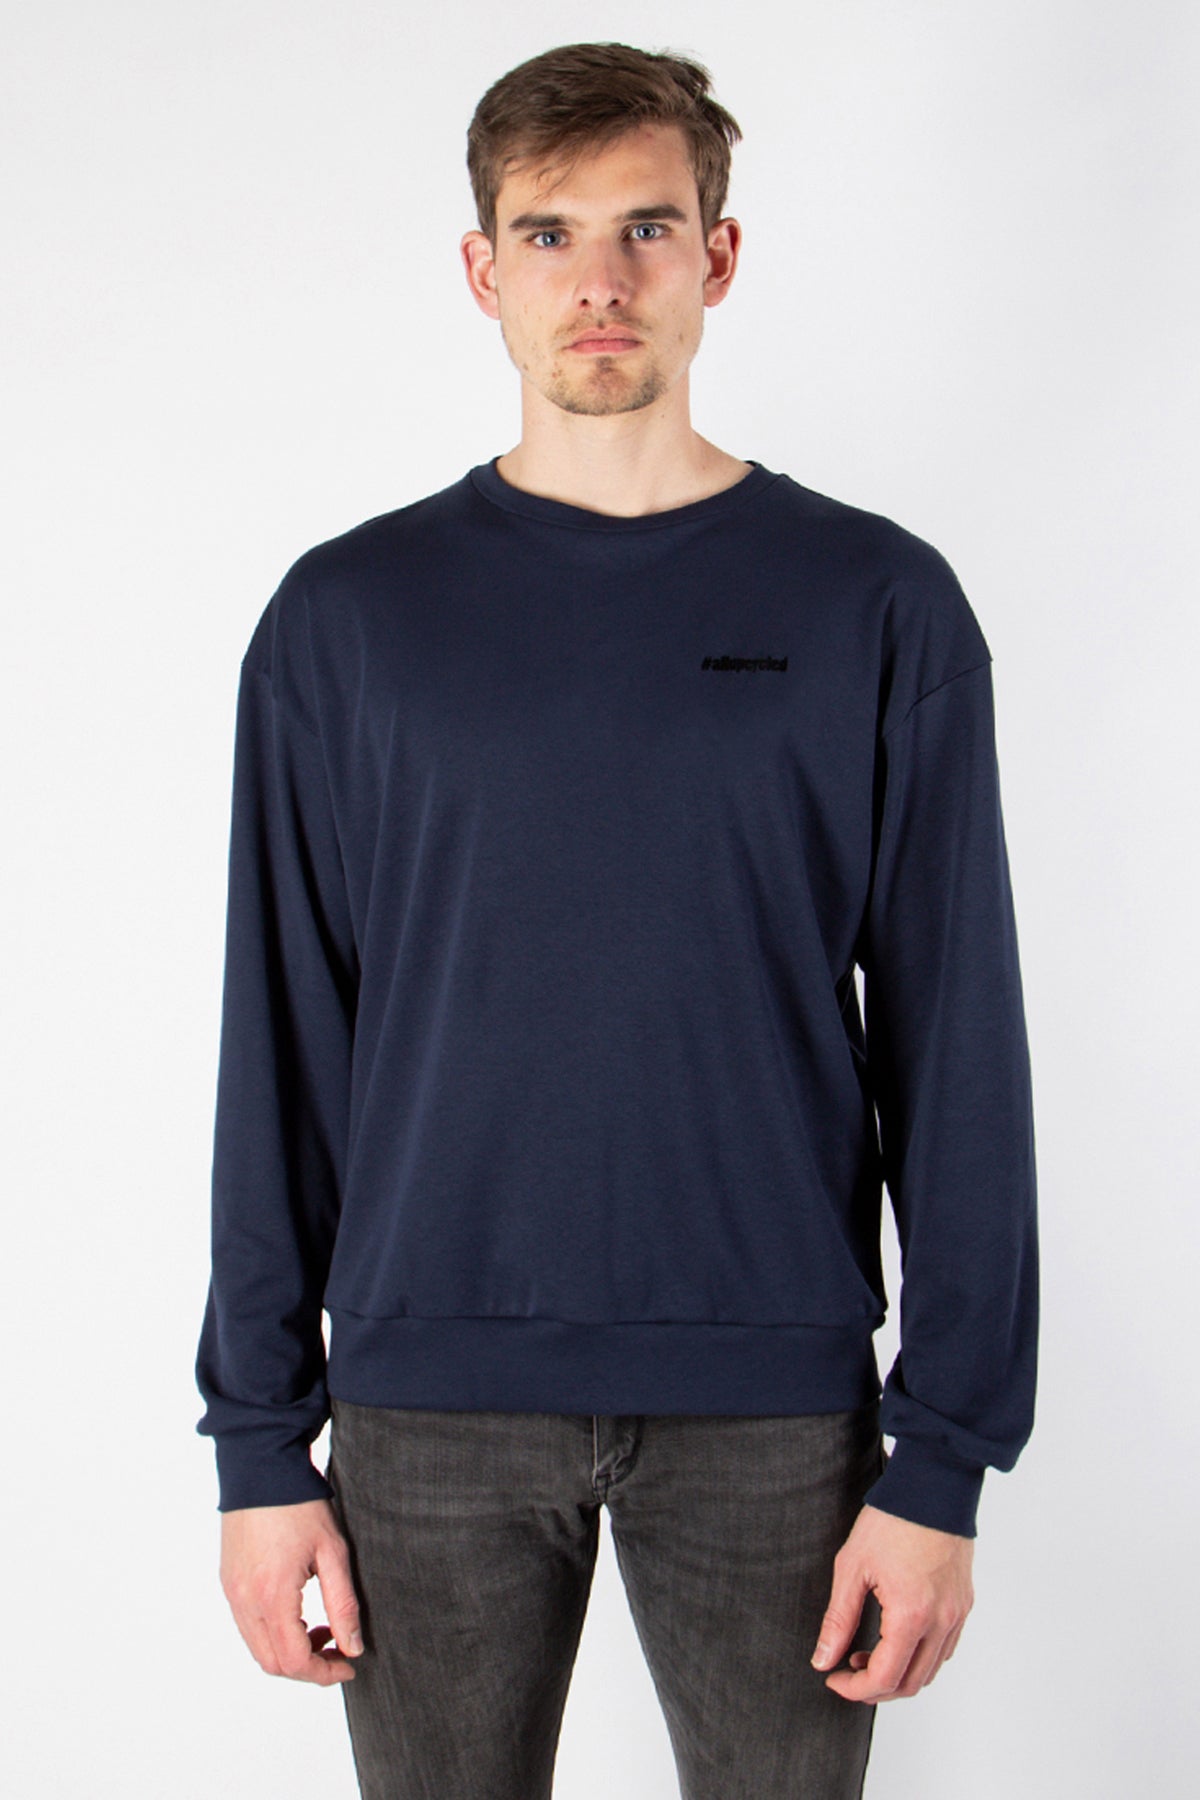 Levi Sweater Unisex - blue